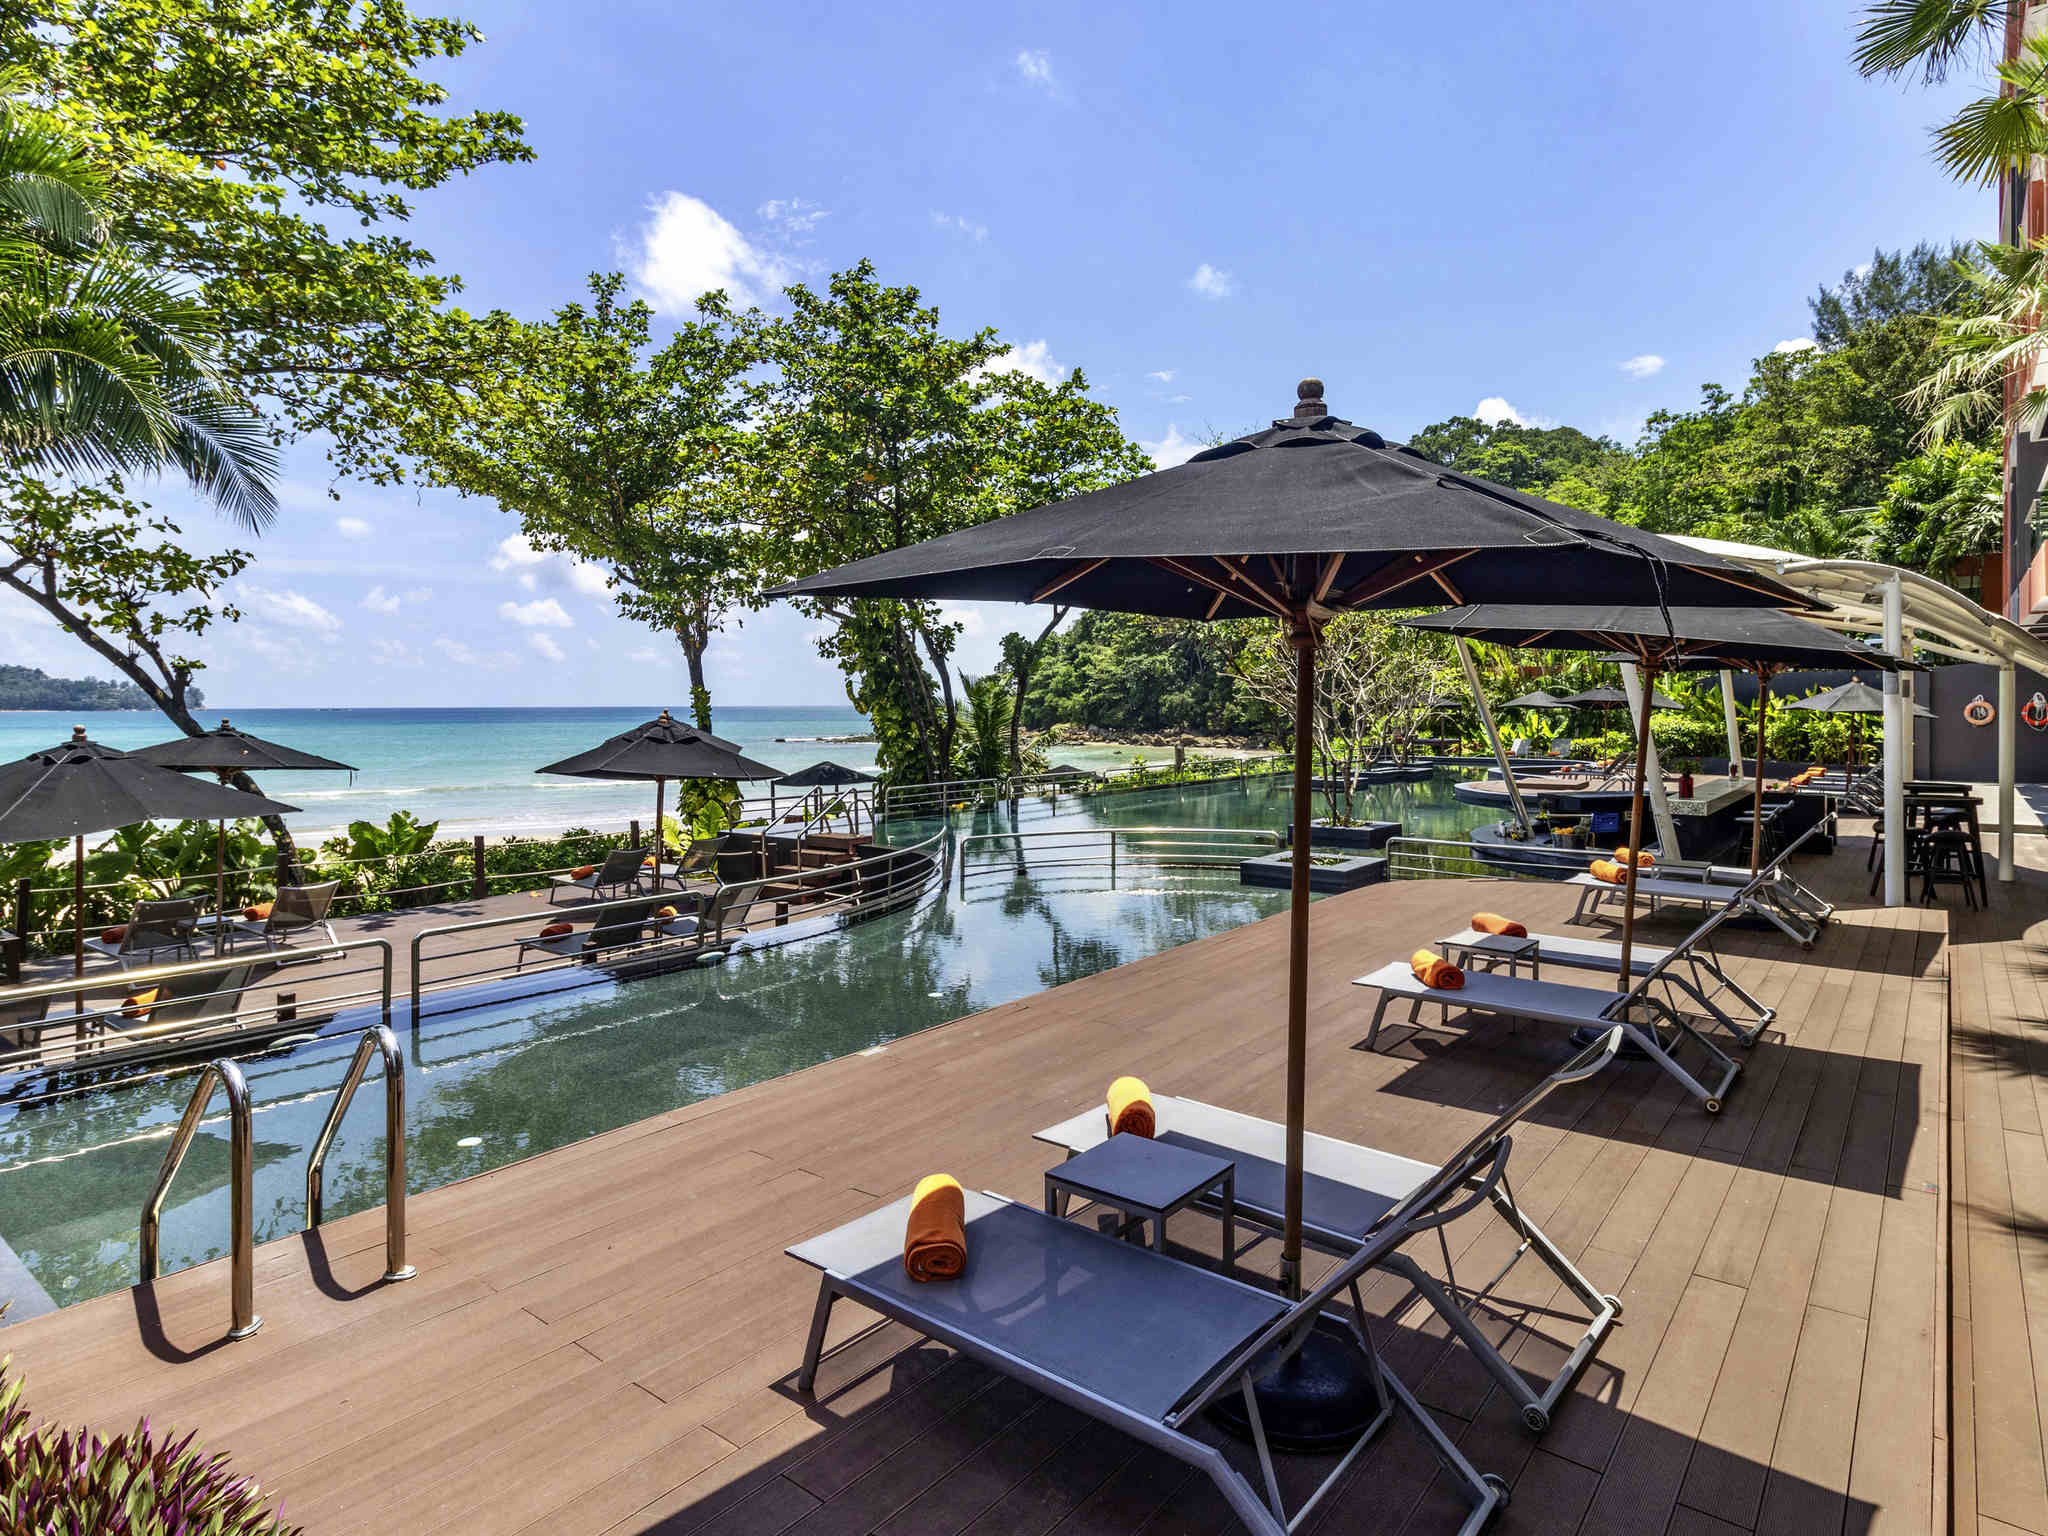 Novotel Phuket Kamala Beach Phuket Thailand Hotel Reviews Photos And Room Info In 2019